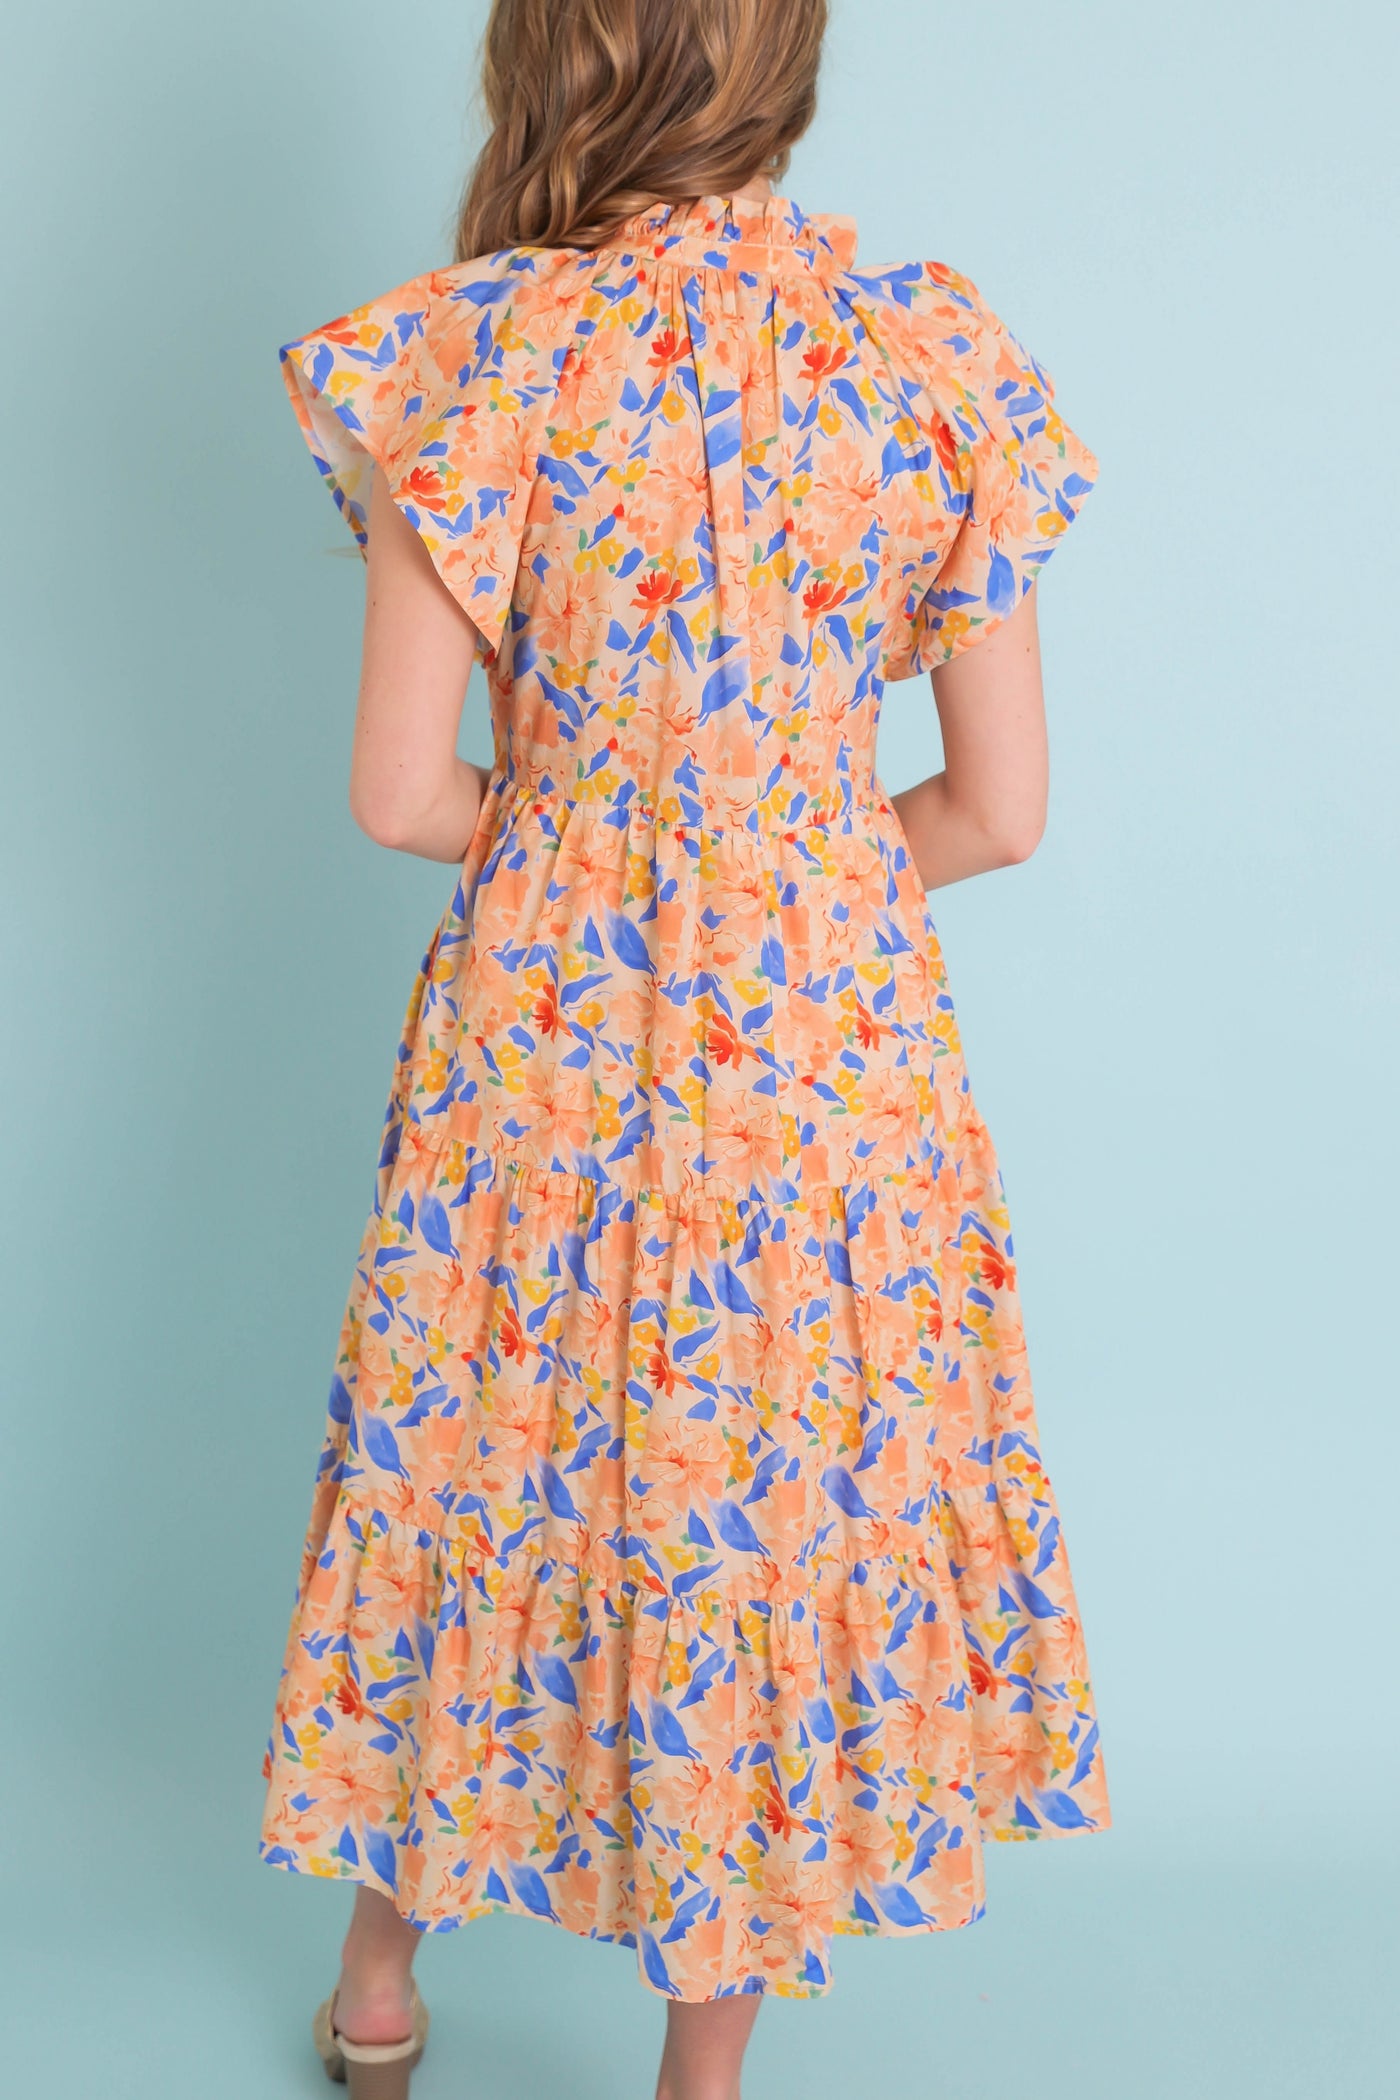 Women's Beautiful Spring Dresses- Women's Floral Print Midi Dress